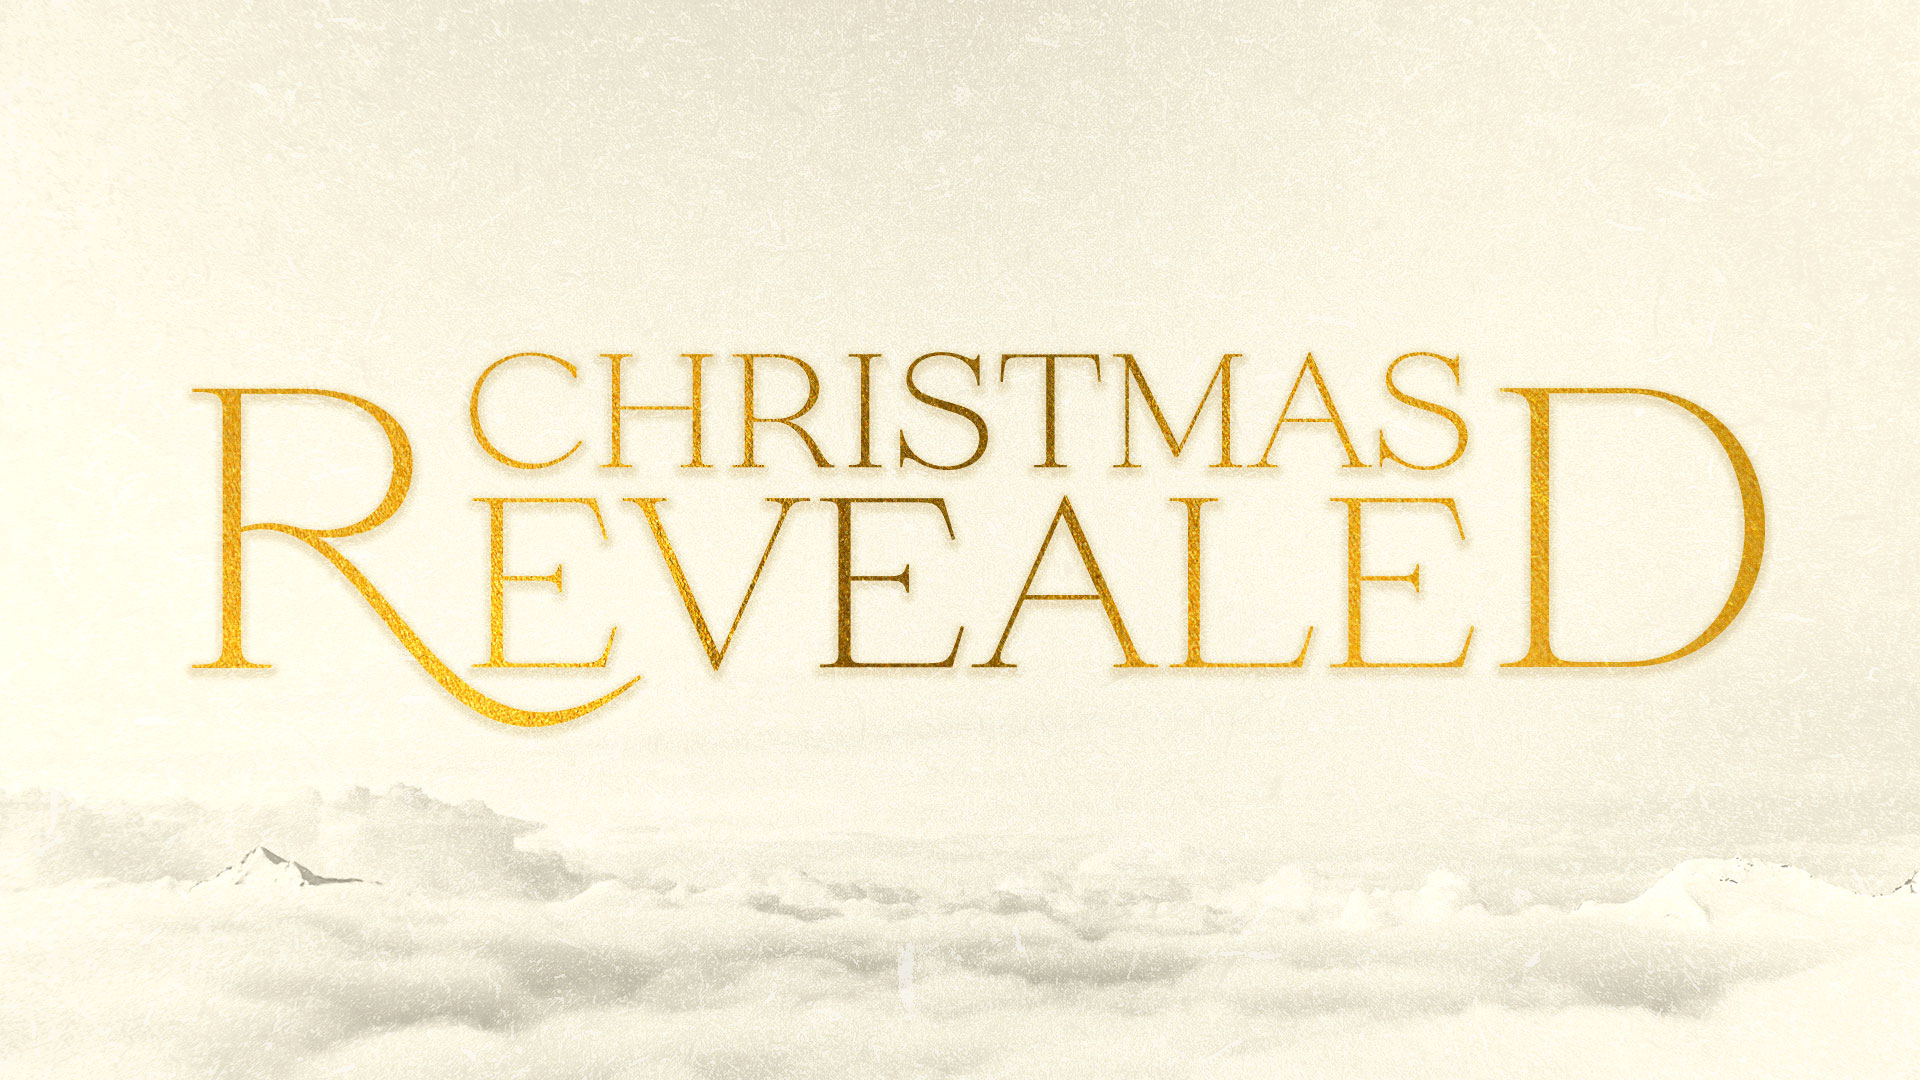 Series: Christmas Revealed